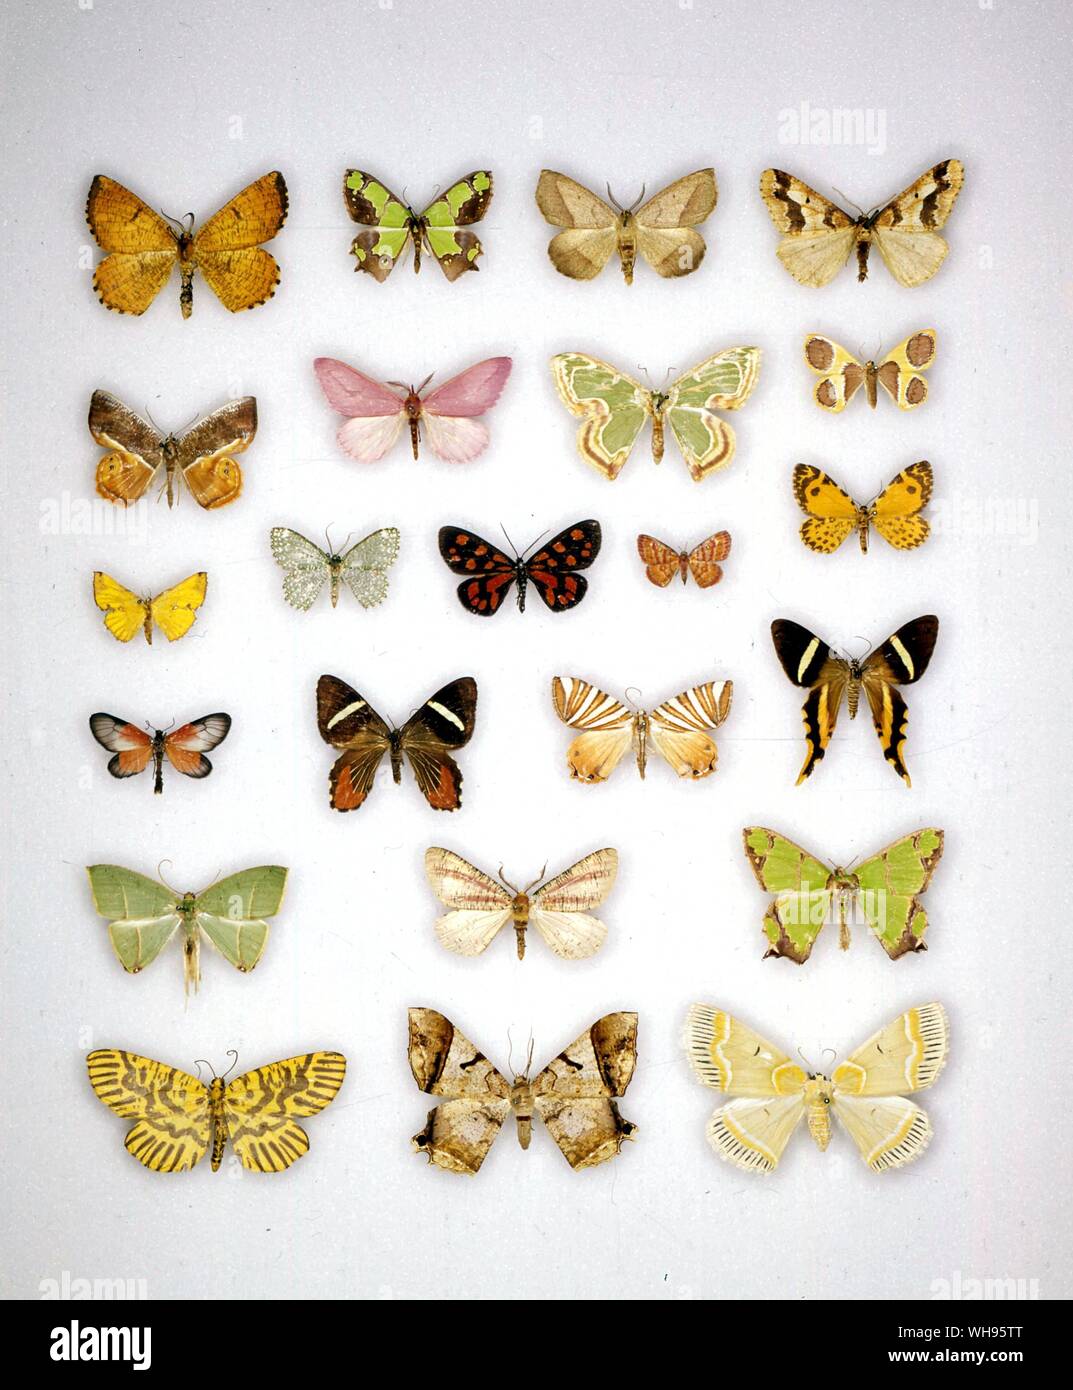 Butterflies/moths - (left to right) Milionia pericallis, Milionia grandis, Milionia elegans, Milionia basalis, Milionia euchromozona, Milionia obiensis, Milionia paradisea, Milionia exultans, Milionia aroensis, Milionia aglaia, Milionia ovata, Milionia callima, Milionia plesiobapta, Milionia coeruleonitens, Milionia lamprima, Arycanda emolliens, Callioratis milliaria, Arycanda vinaceostriga, Callipia paradisea, Eumelea fumicosta, Gonora hyelosioides Stock Photo